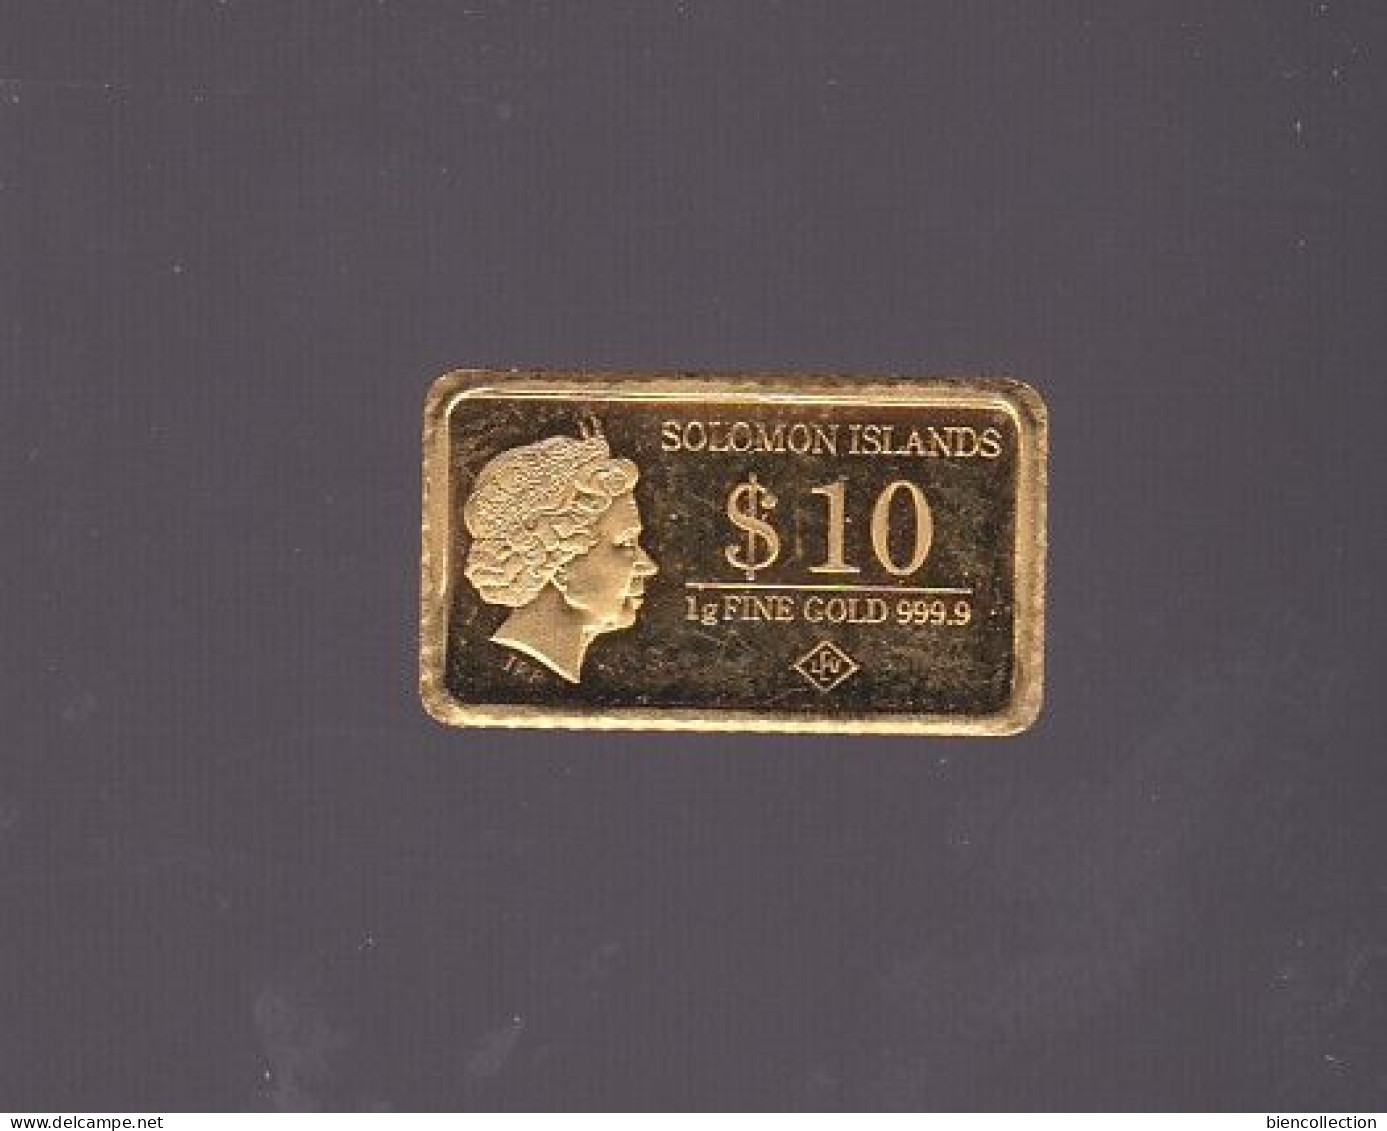 Salomon. 10$ ; Billet En Or 1 Gramme. Gold Banknote - Salomons